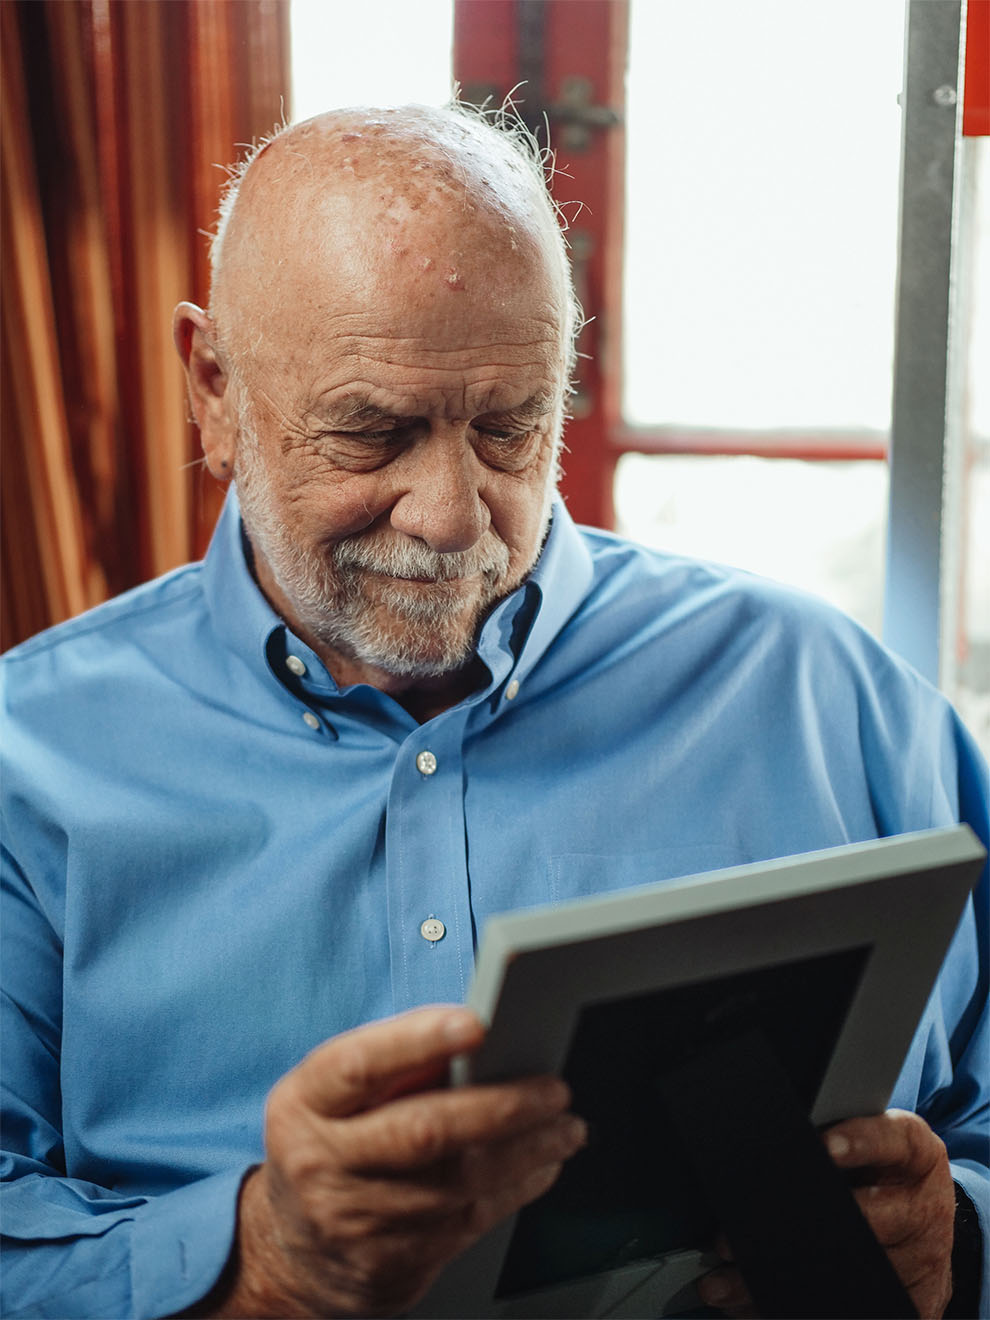 An older gentleman looking at a photograph